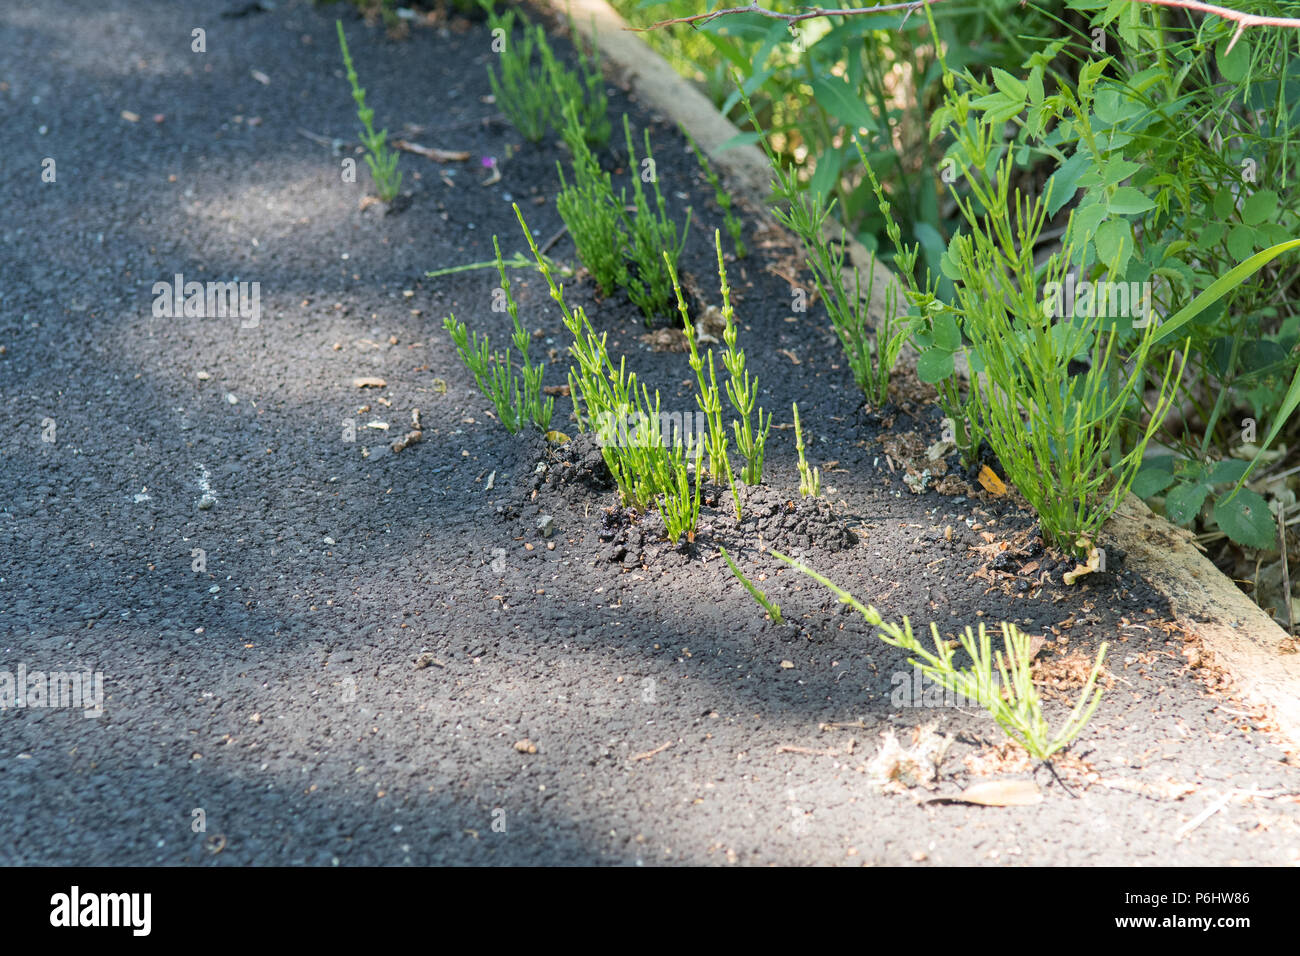 Weed Equiseto o cola de caballo - Equisetum arvense - creciendo a través de asfalto, Scotland, Reino Unido Foto de stock